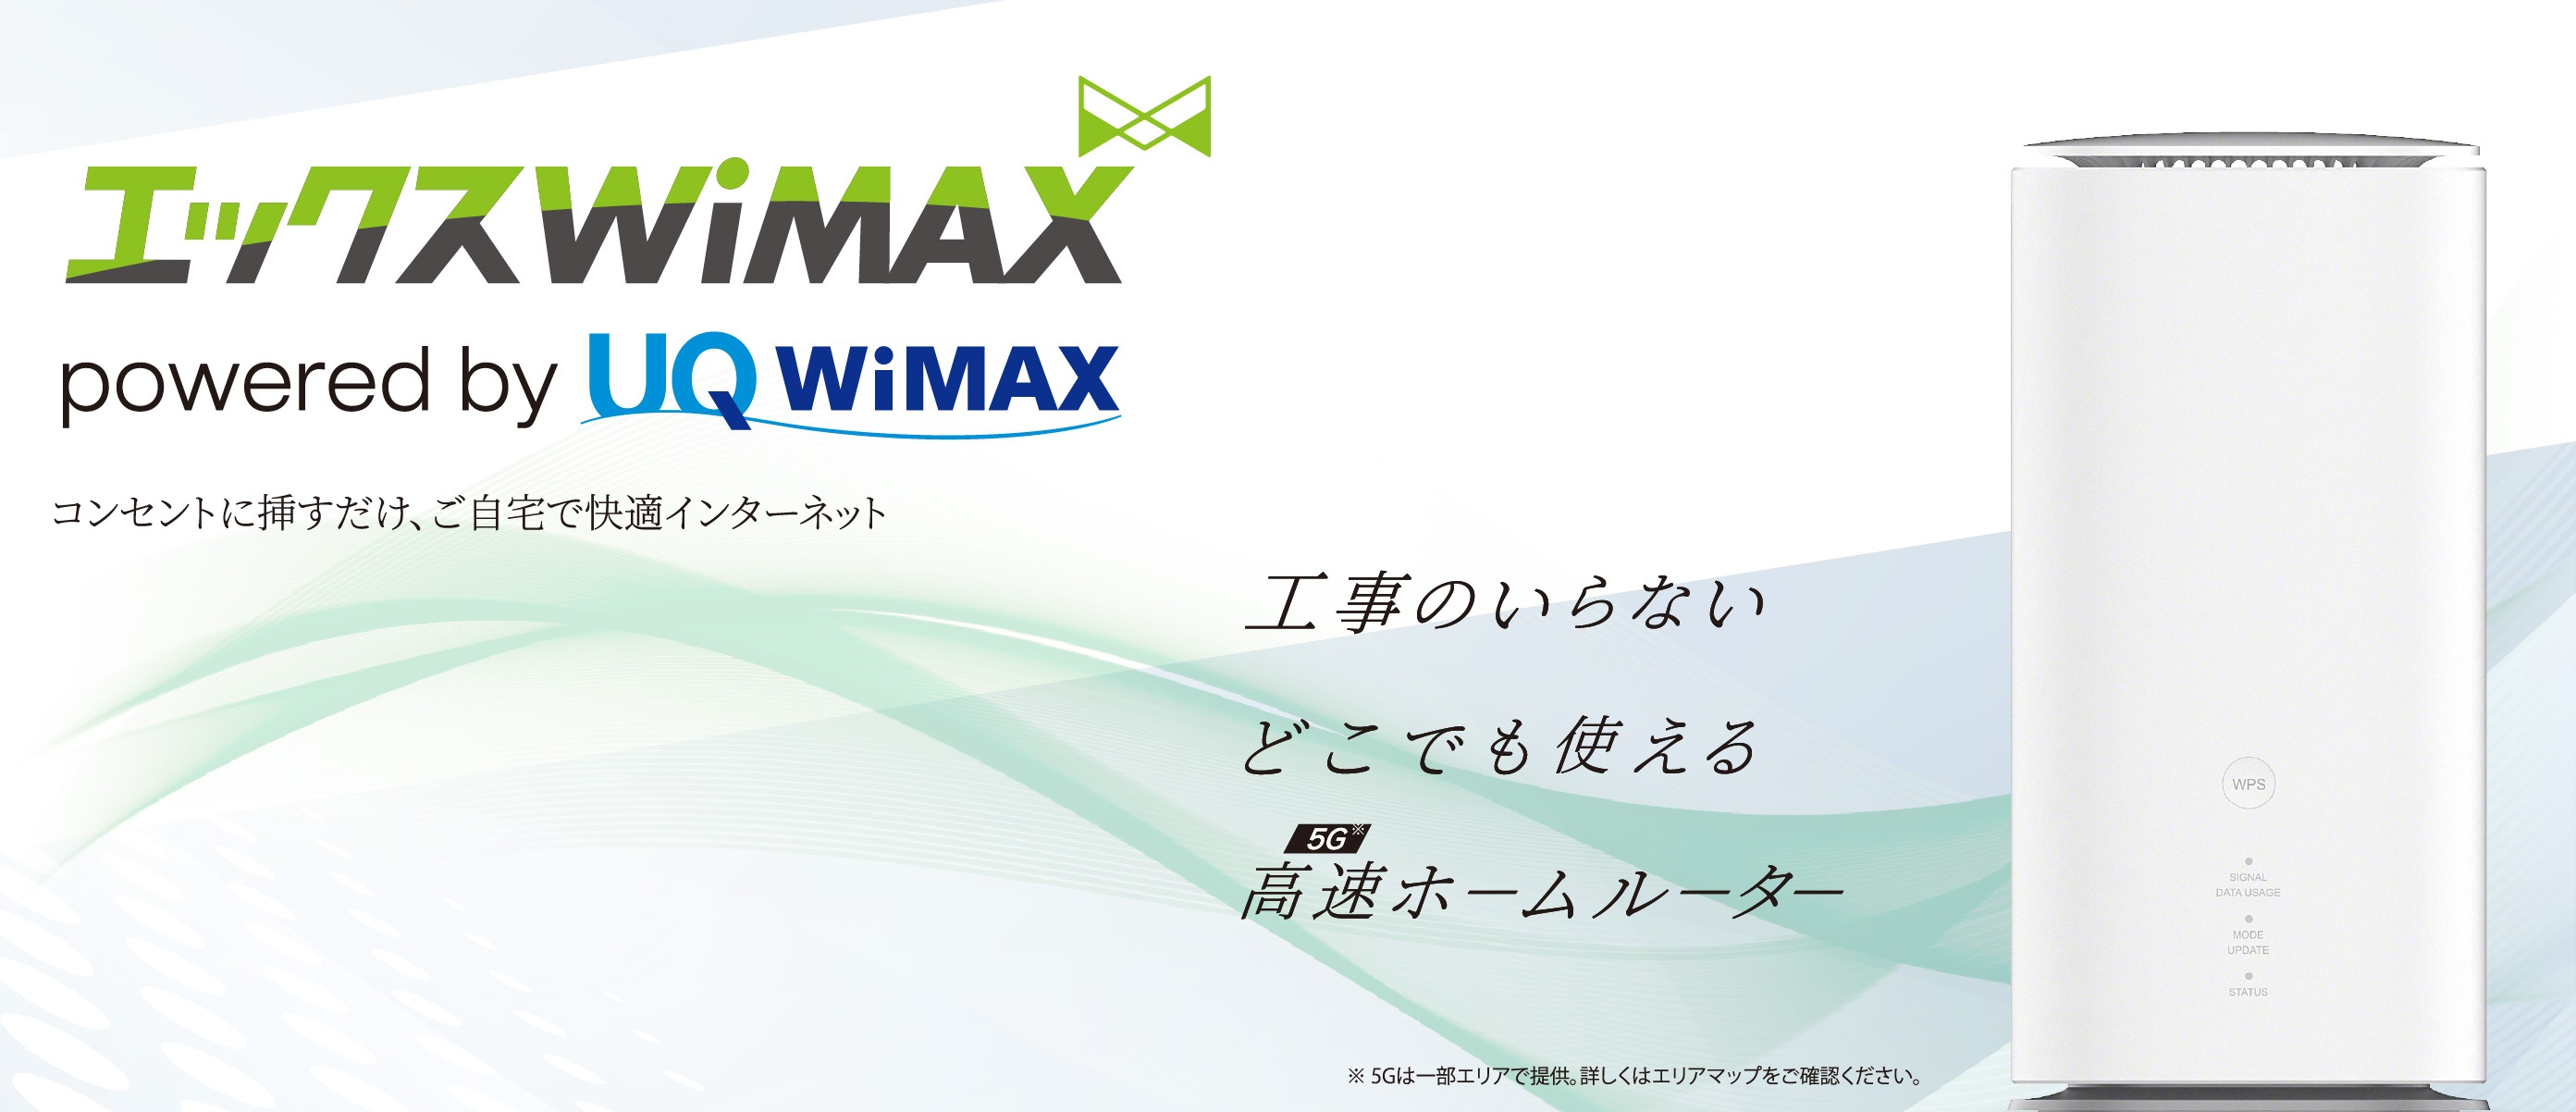 X-wimax